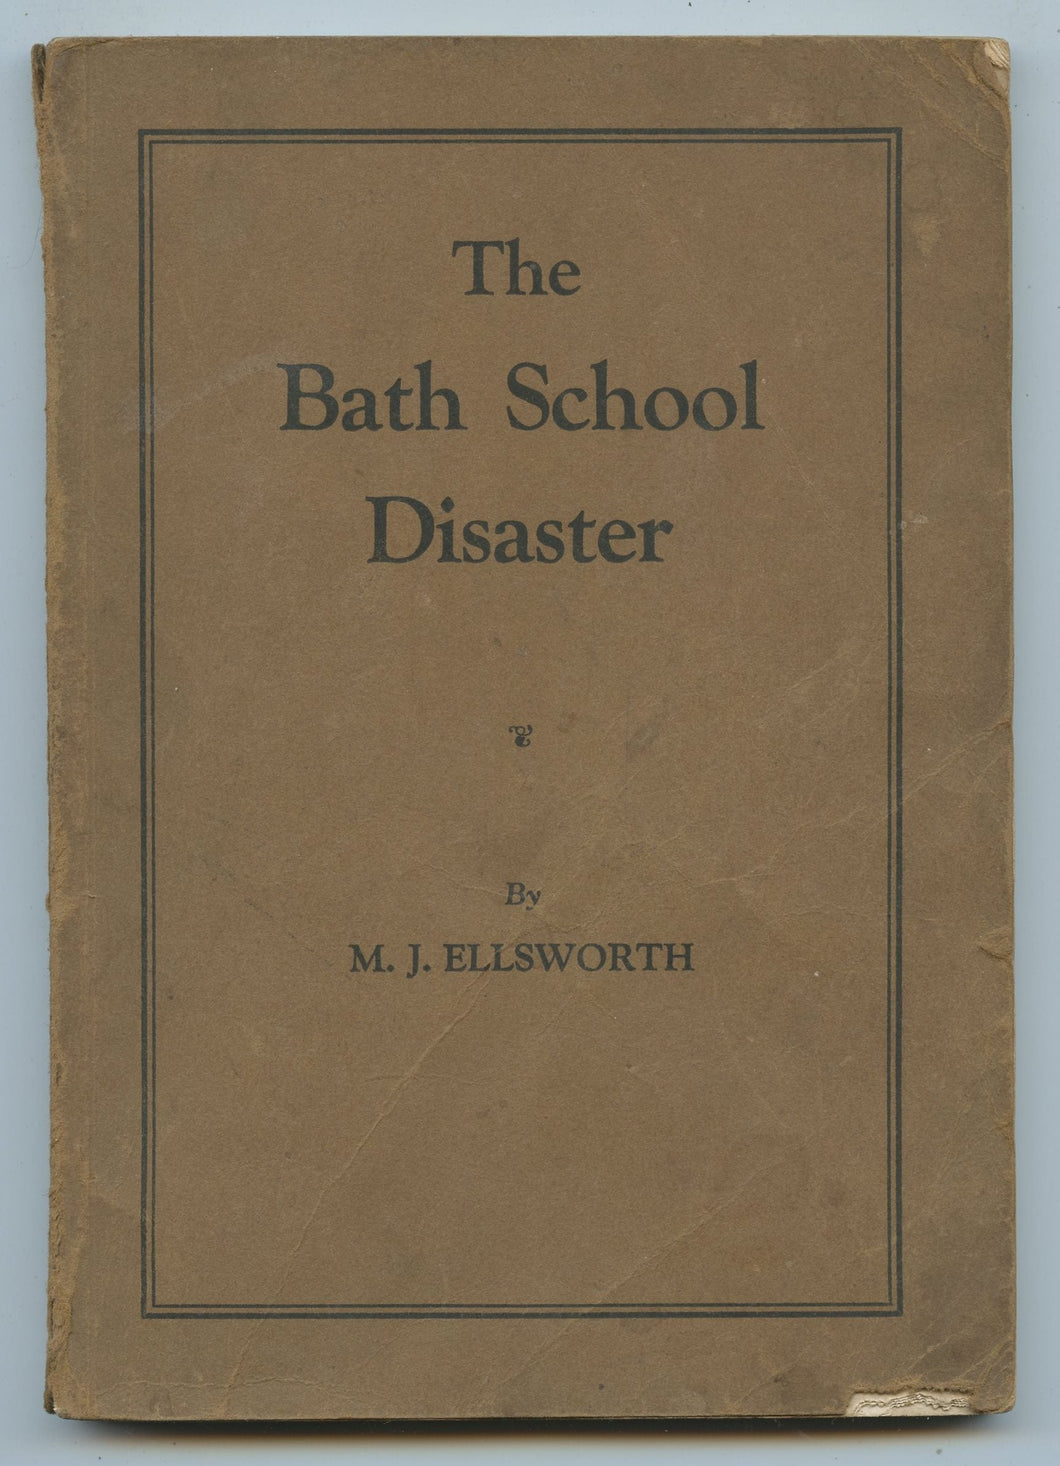 The Bath School Disaster